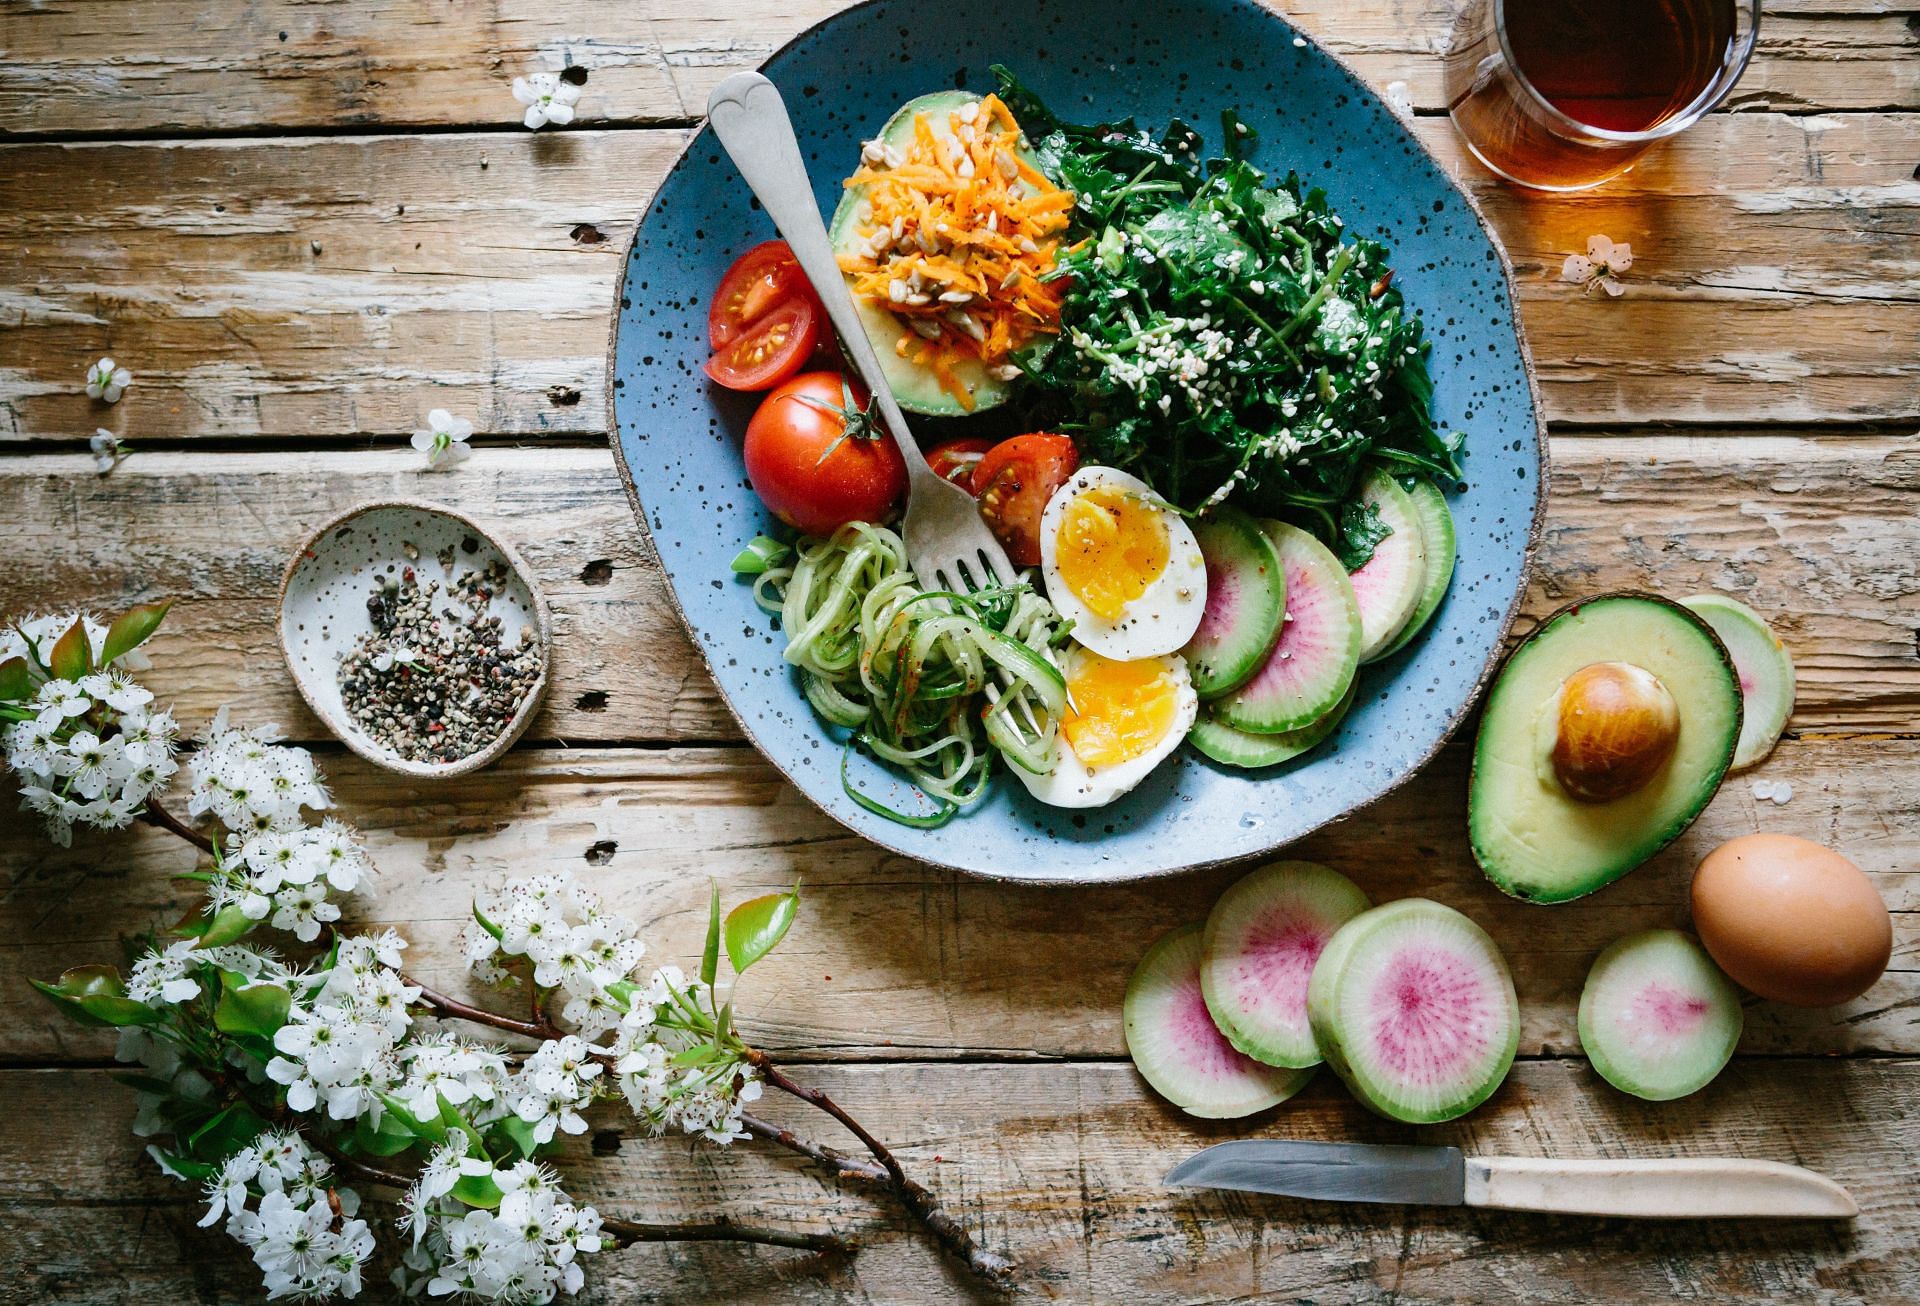 Healthy foods can improve physical and mental wellness (Image via Unsplash/Brooke Lark)